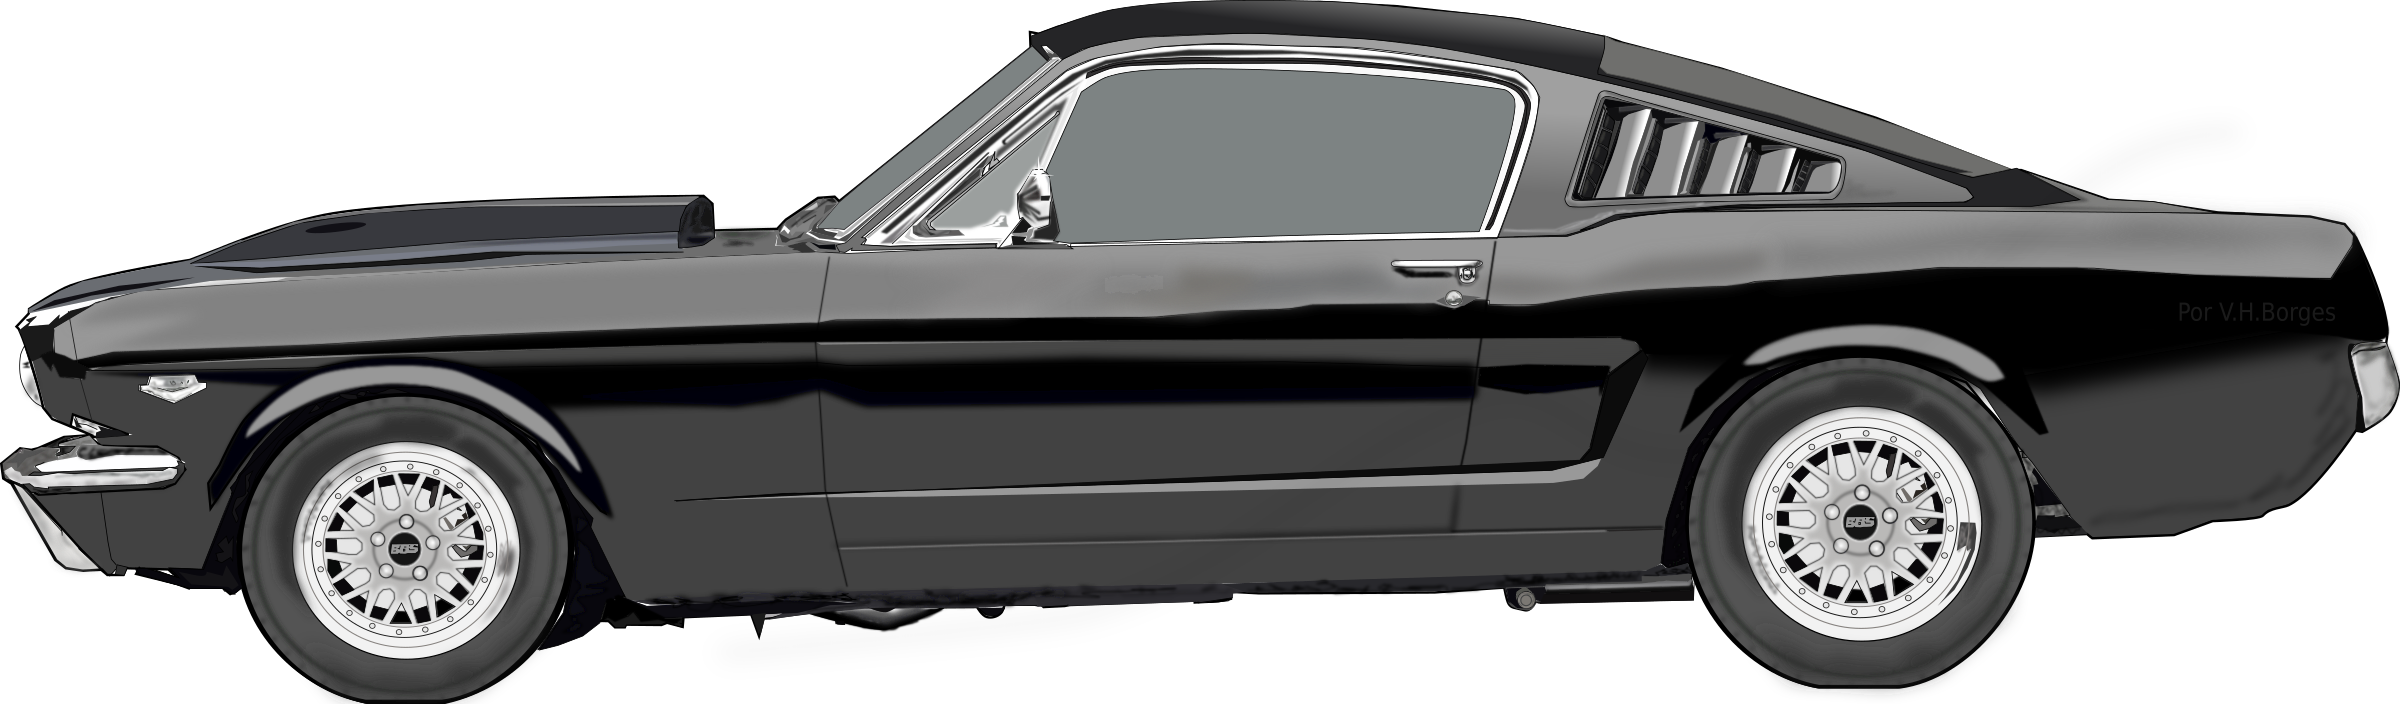 Mustang PNG Pic